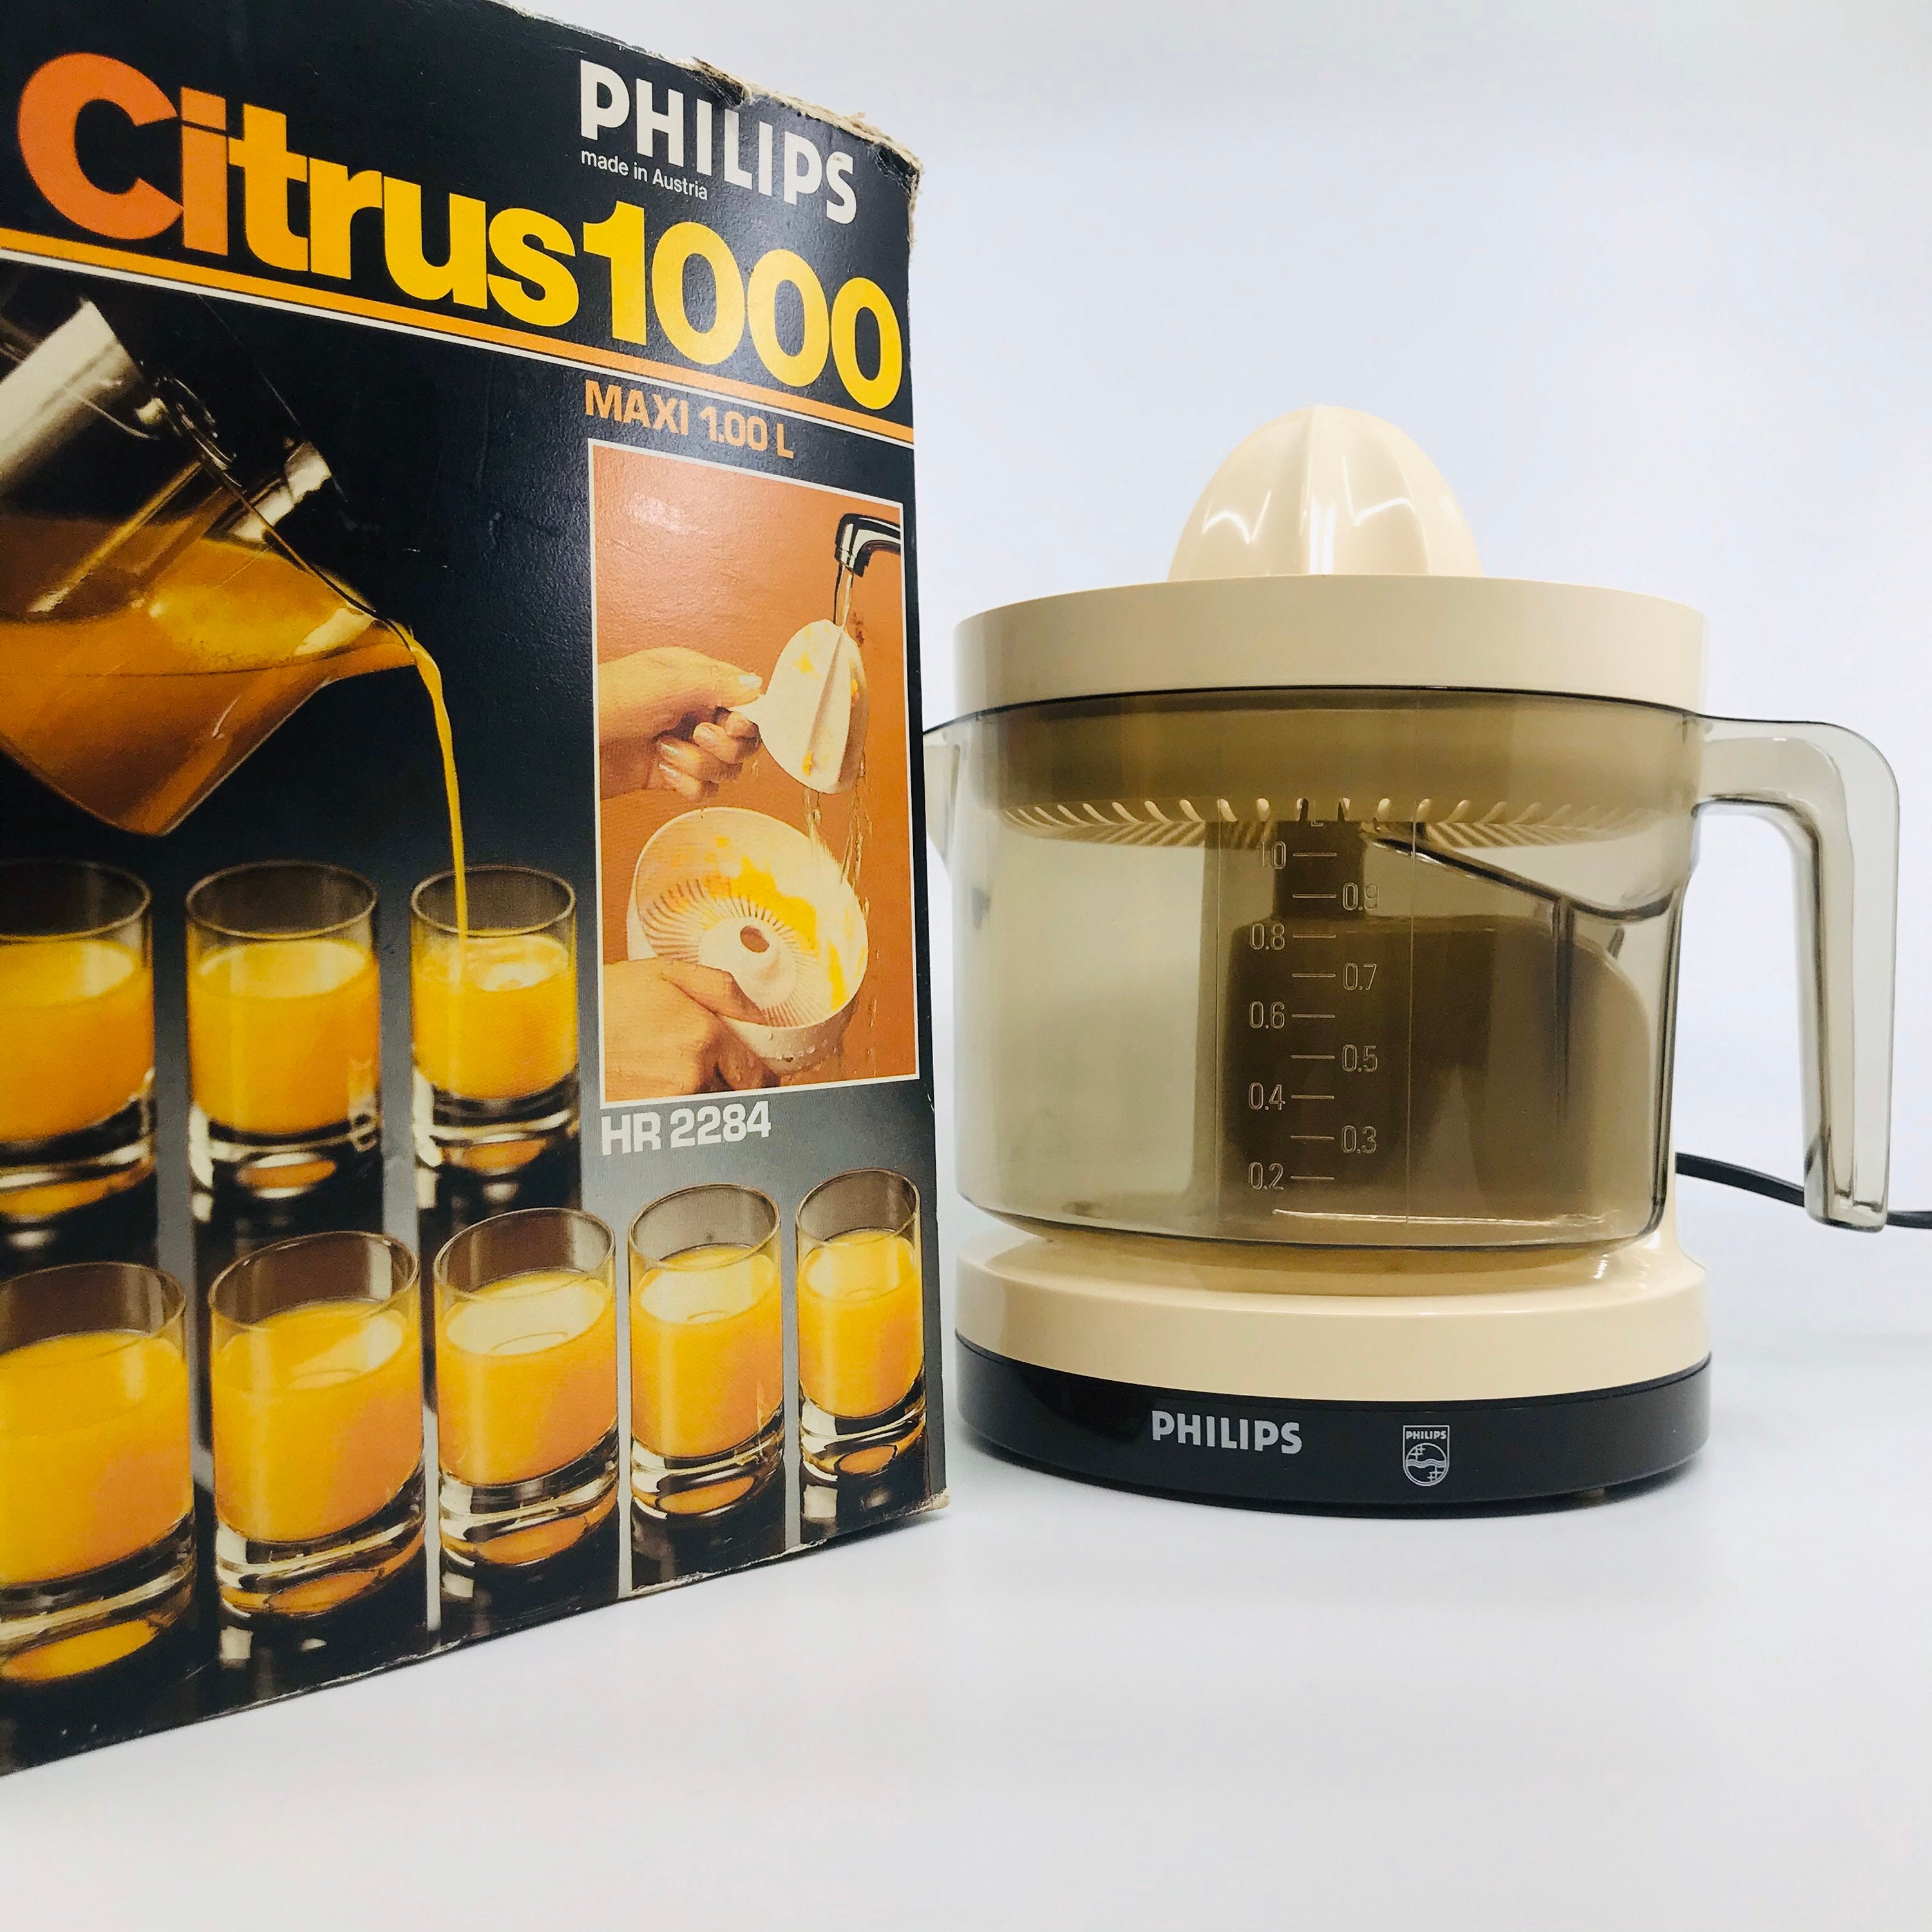 Vintage Philips Citrus1000 Press Electric - Etsy